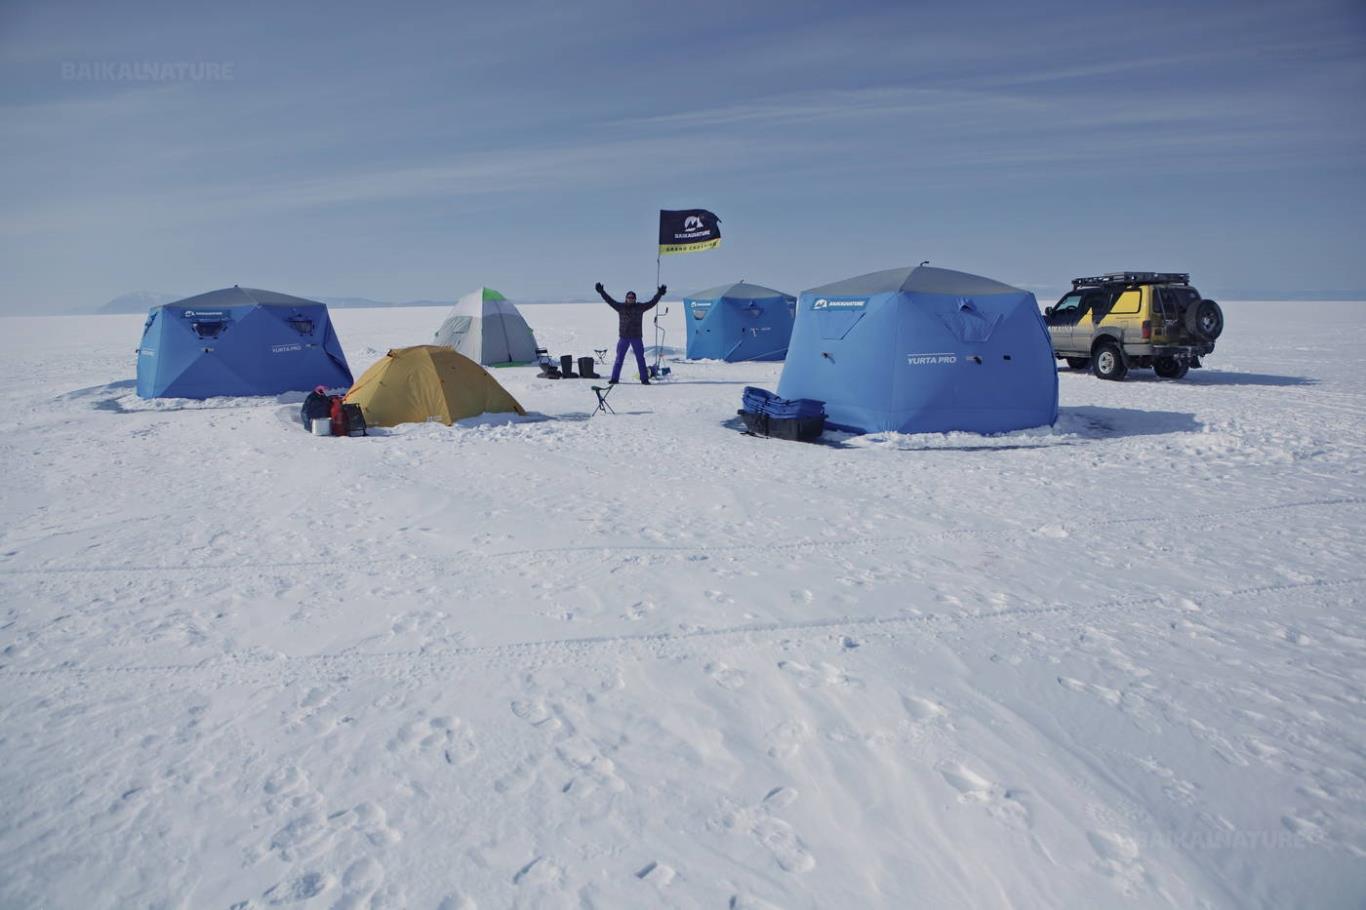 Ice camp. Лагерь на льду Байкала. Ночевка на Байкале. Ночевка на льду Байкала. Юрт лагерь на Байкале на льду.